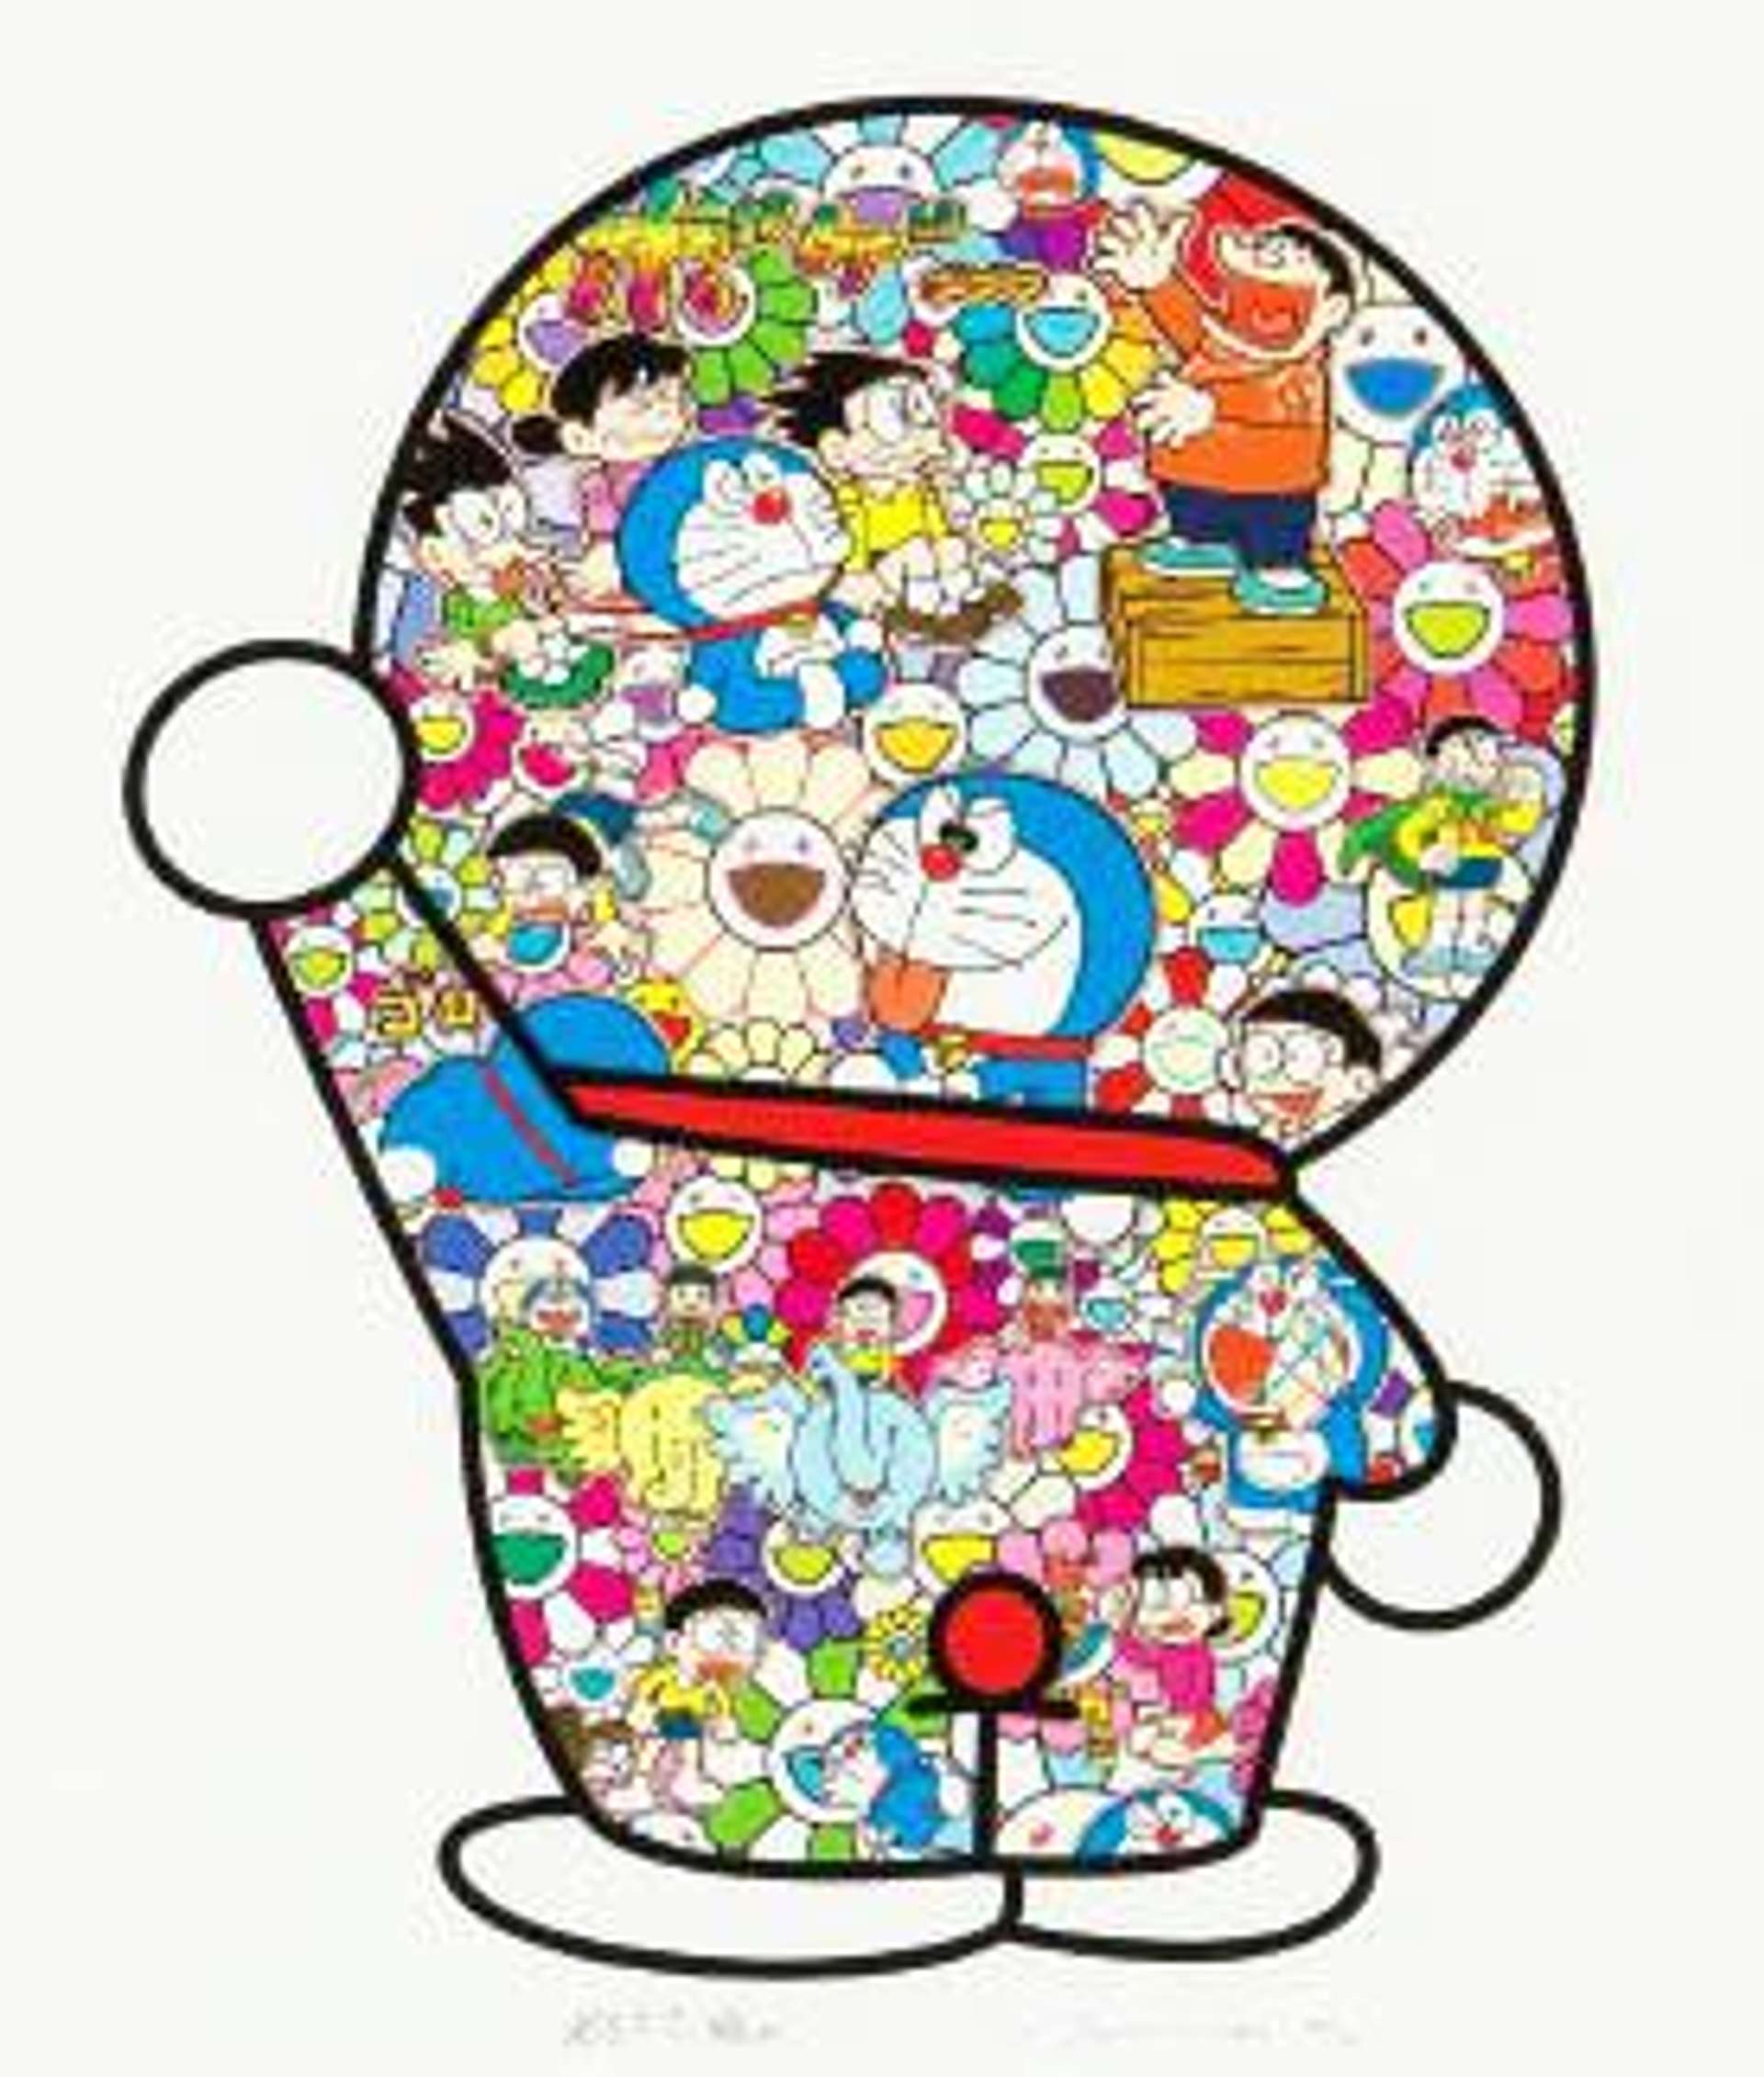 Doraemon’s Daily Life - Signed Print by Takashi Murakami 2019 - MyArtBroker